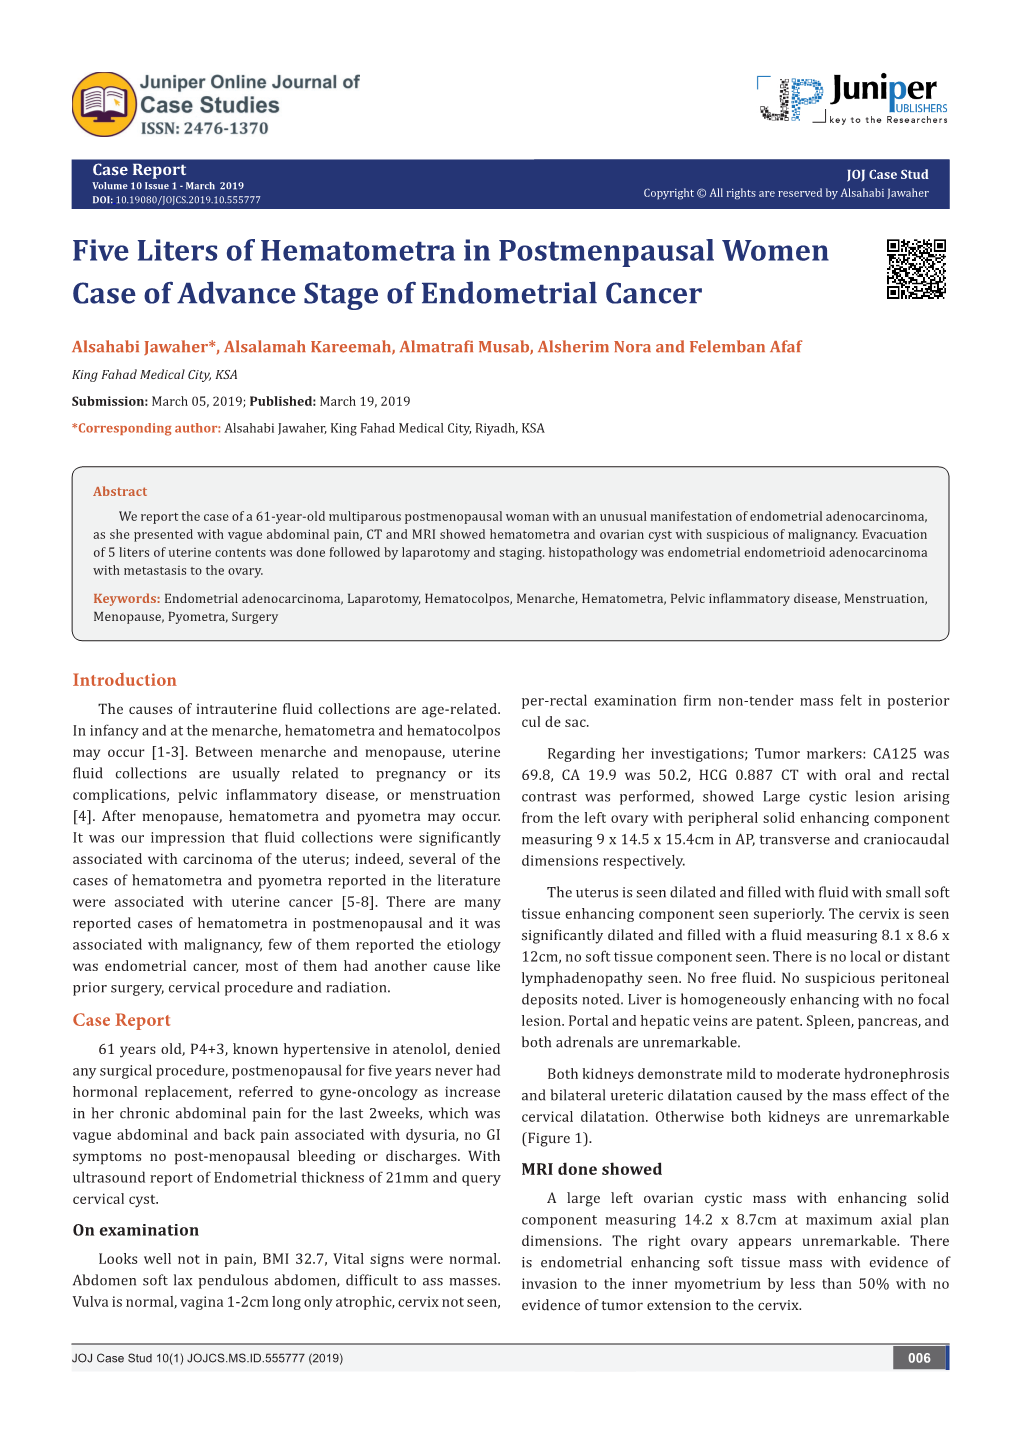 Five Liters of Hematometra in Postmenpausal Women Case of Advance Stage of Endometrial Cancer